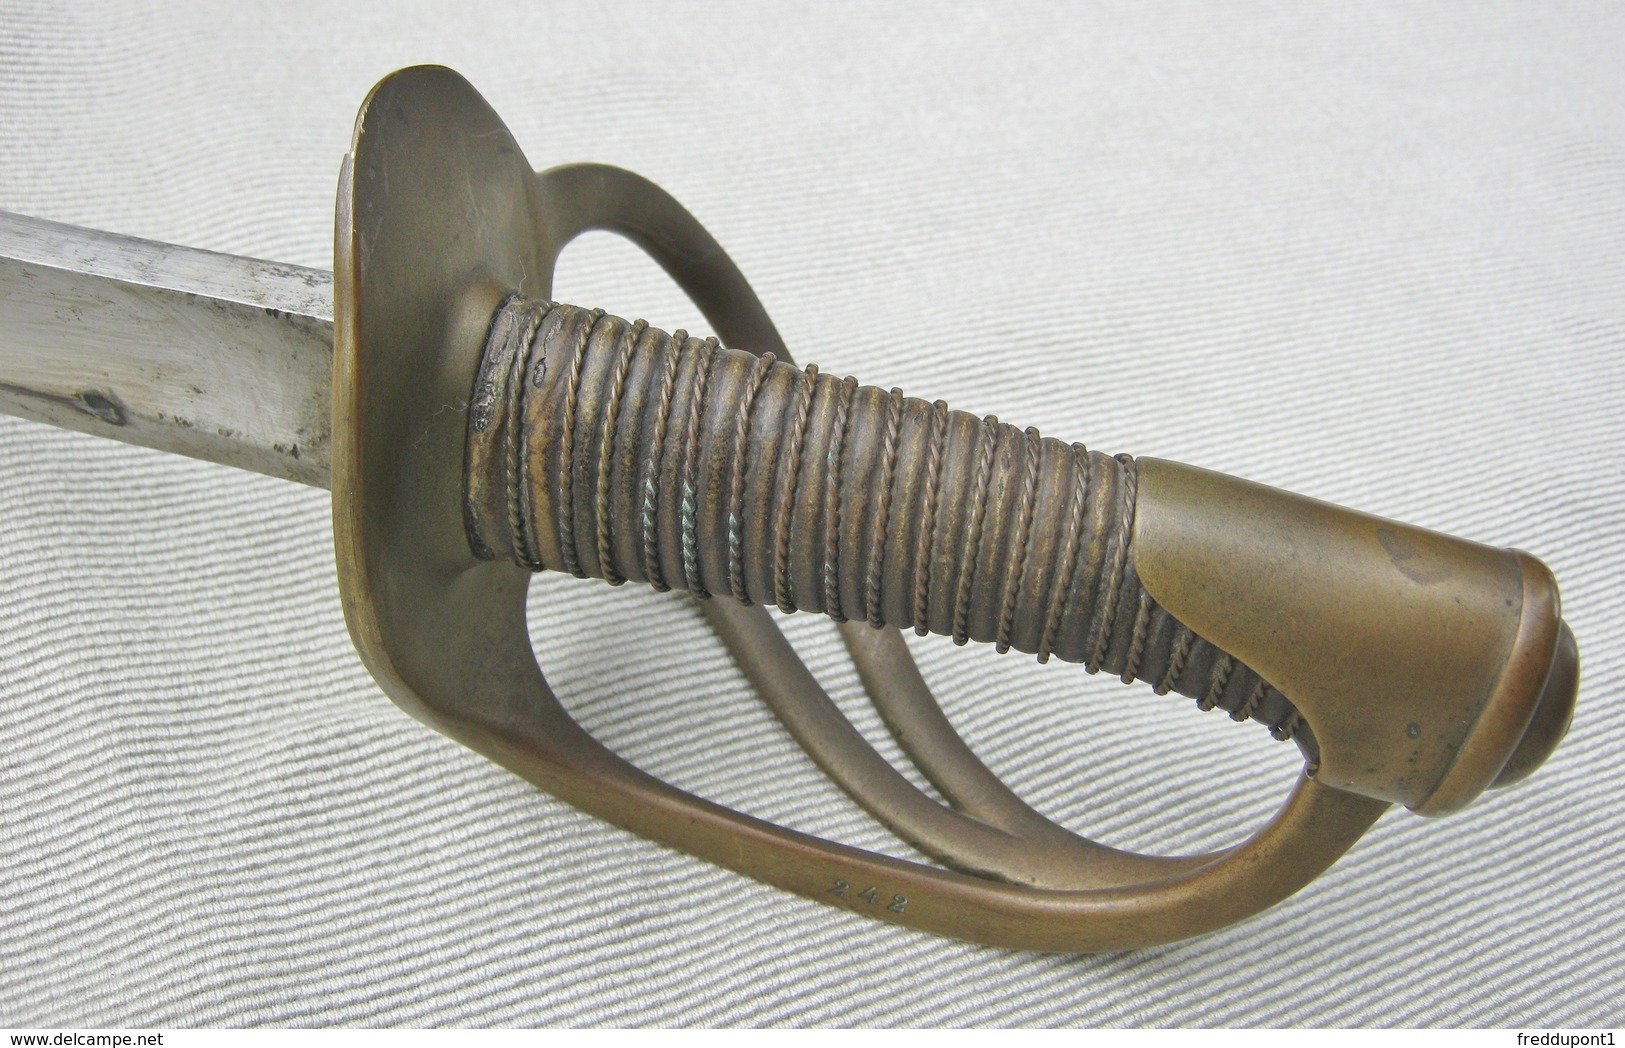 sabre sword cavalerie 1822 modifié 1882 fourreau même numéro